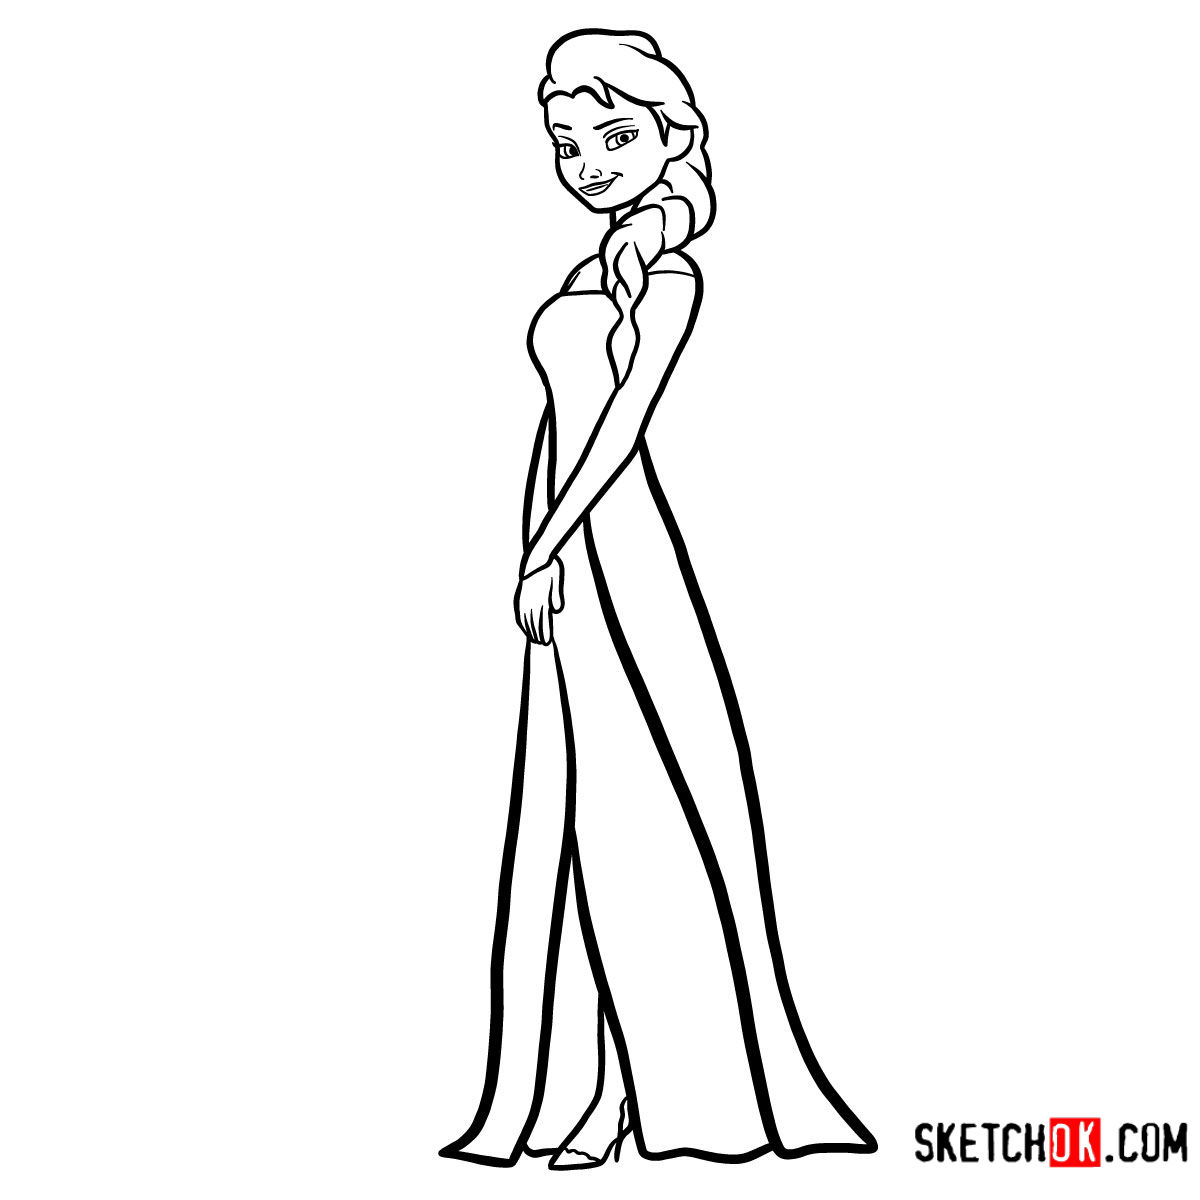 How to draw Princess Elsa | Frozen